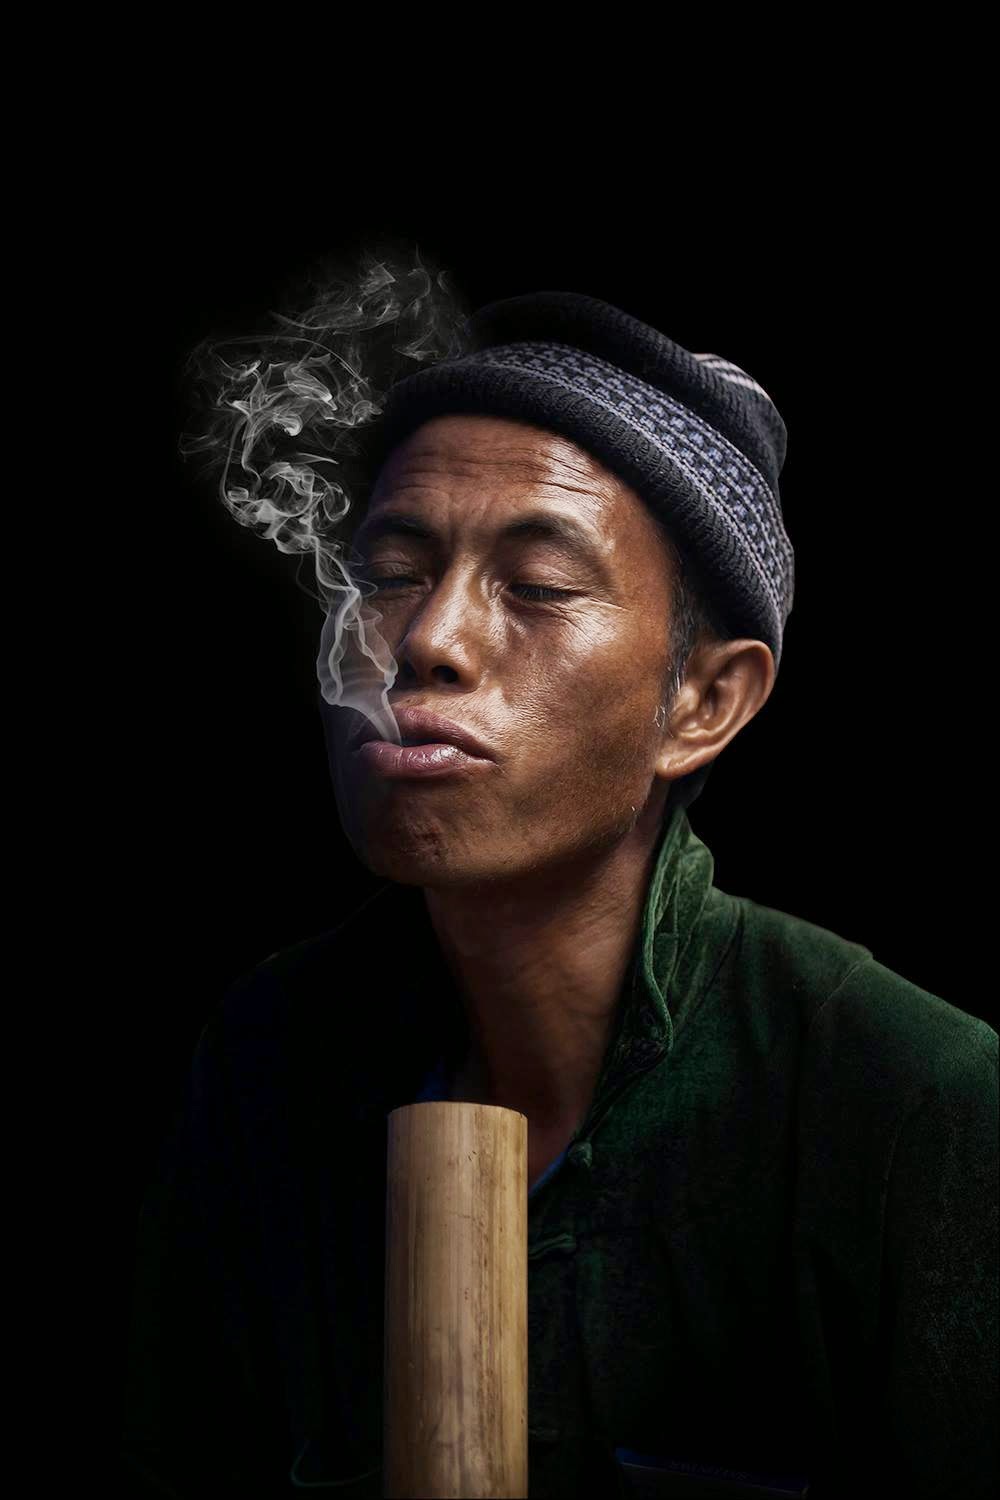 rehahn portrait photography rehahn photography vietnam (1)